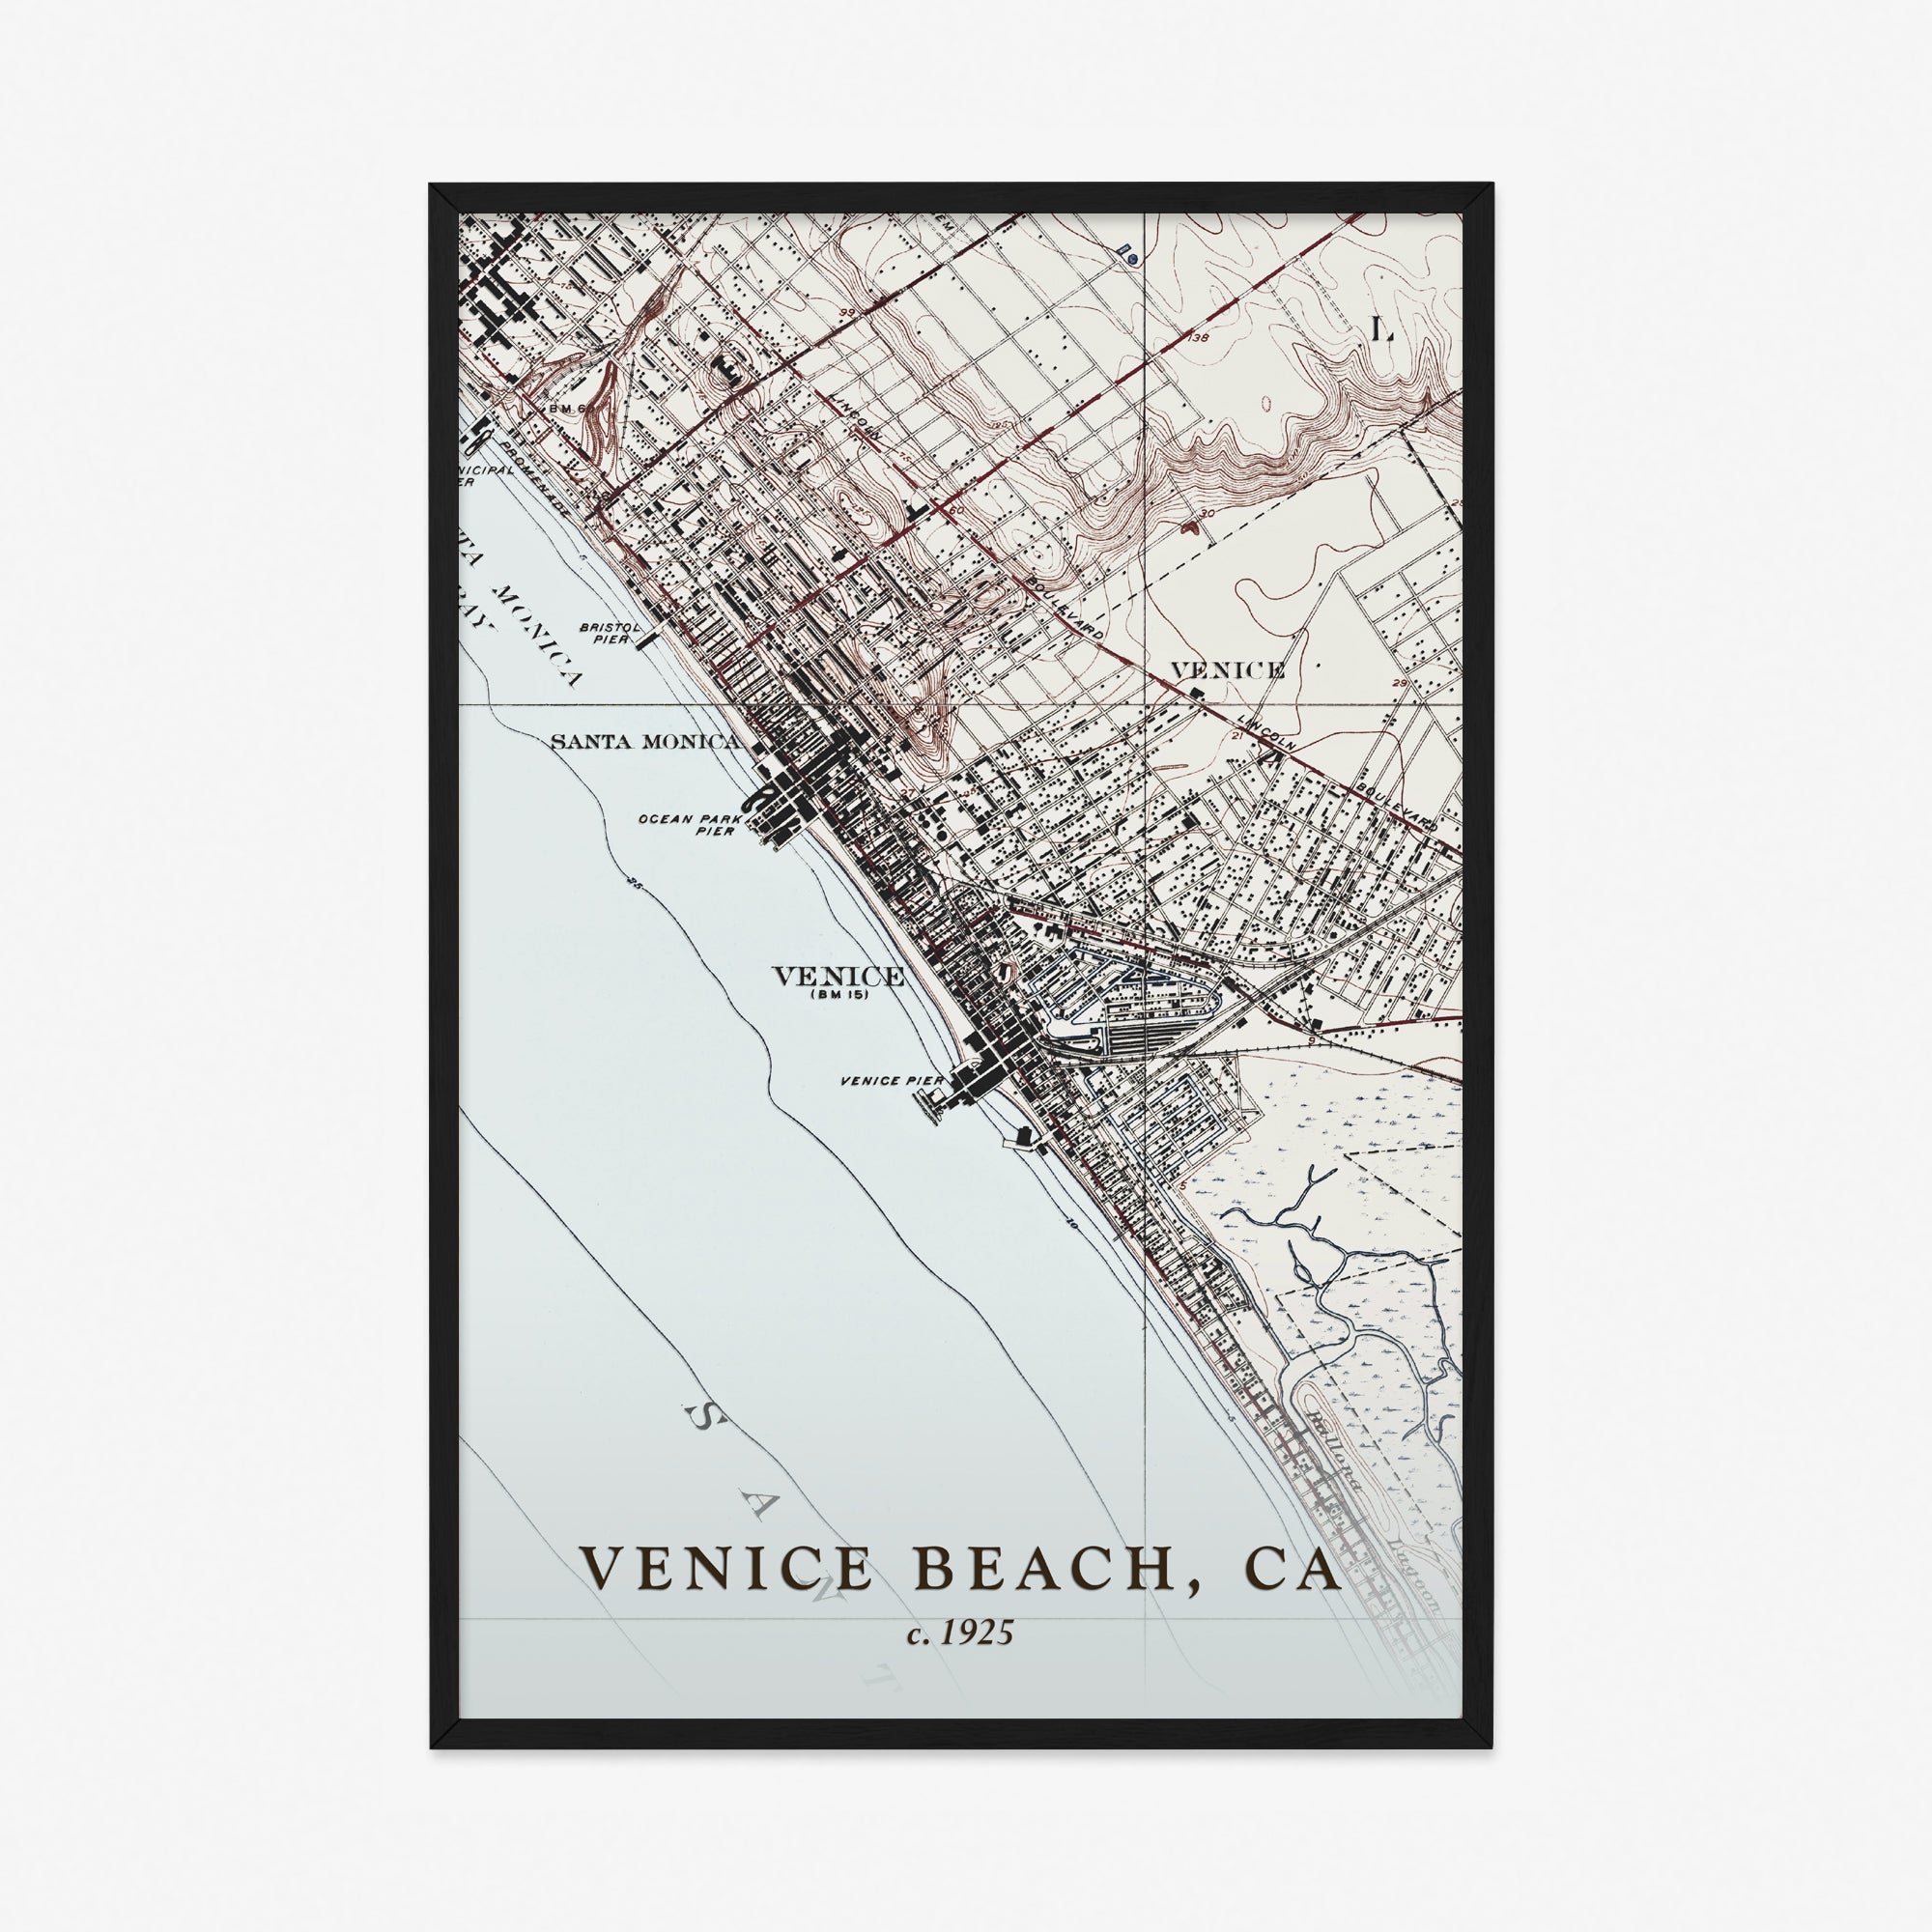 Venice Beach, CA - 1925 Topographic Map